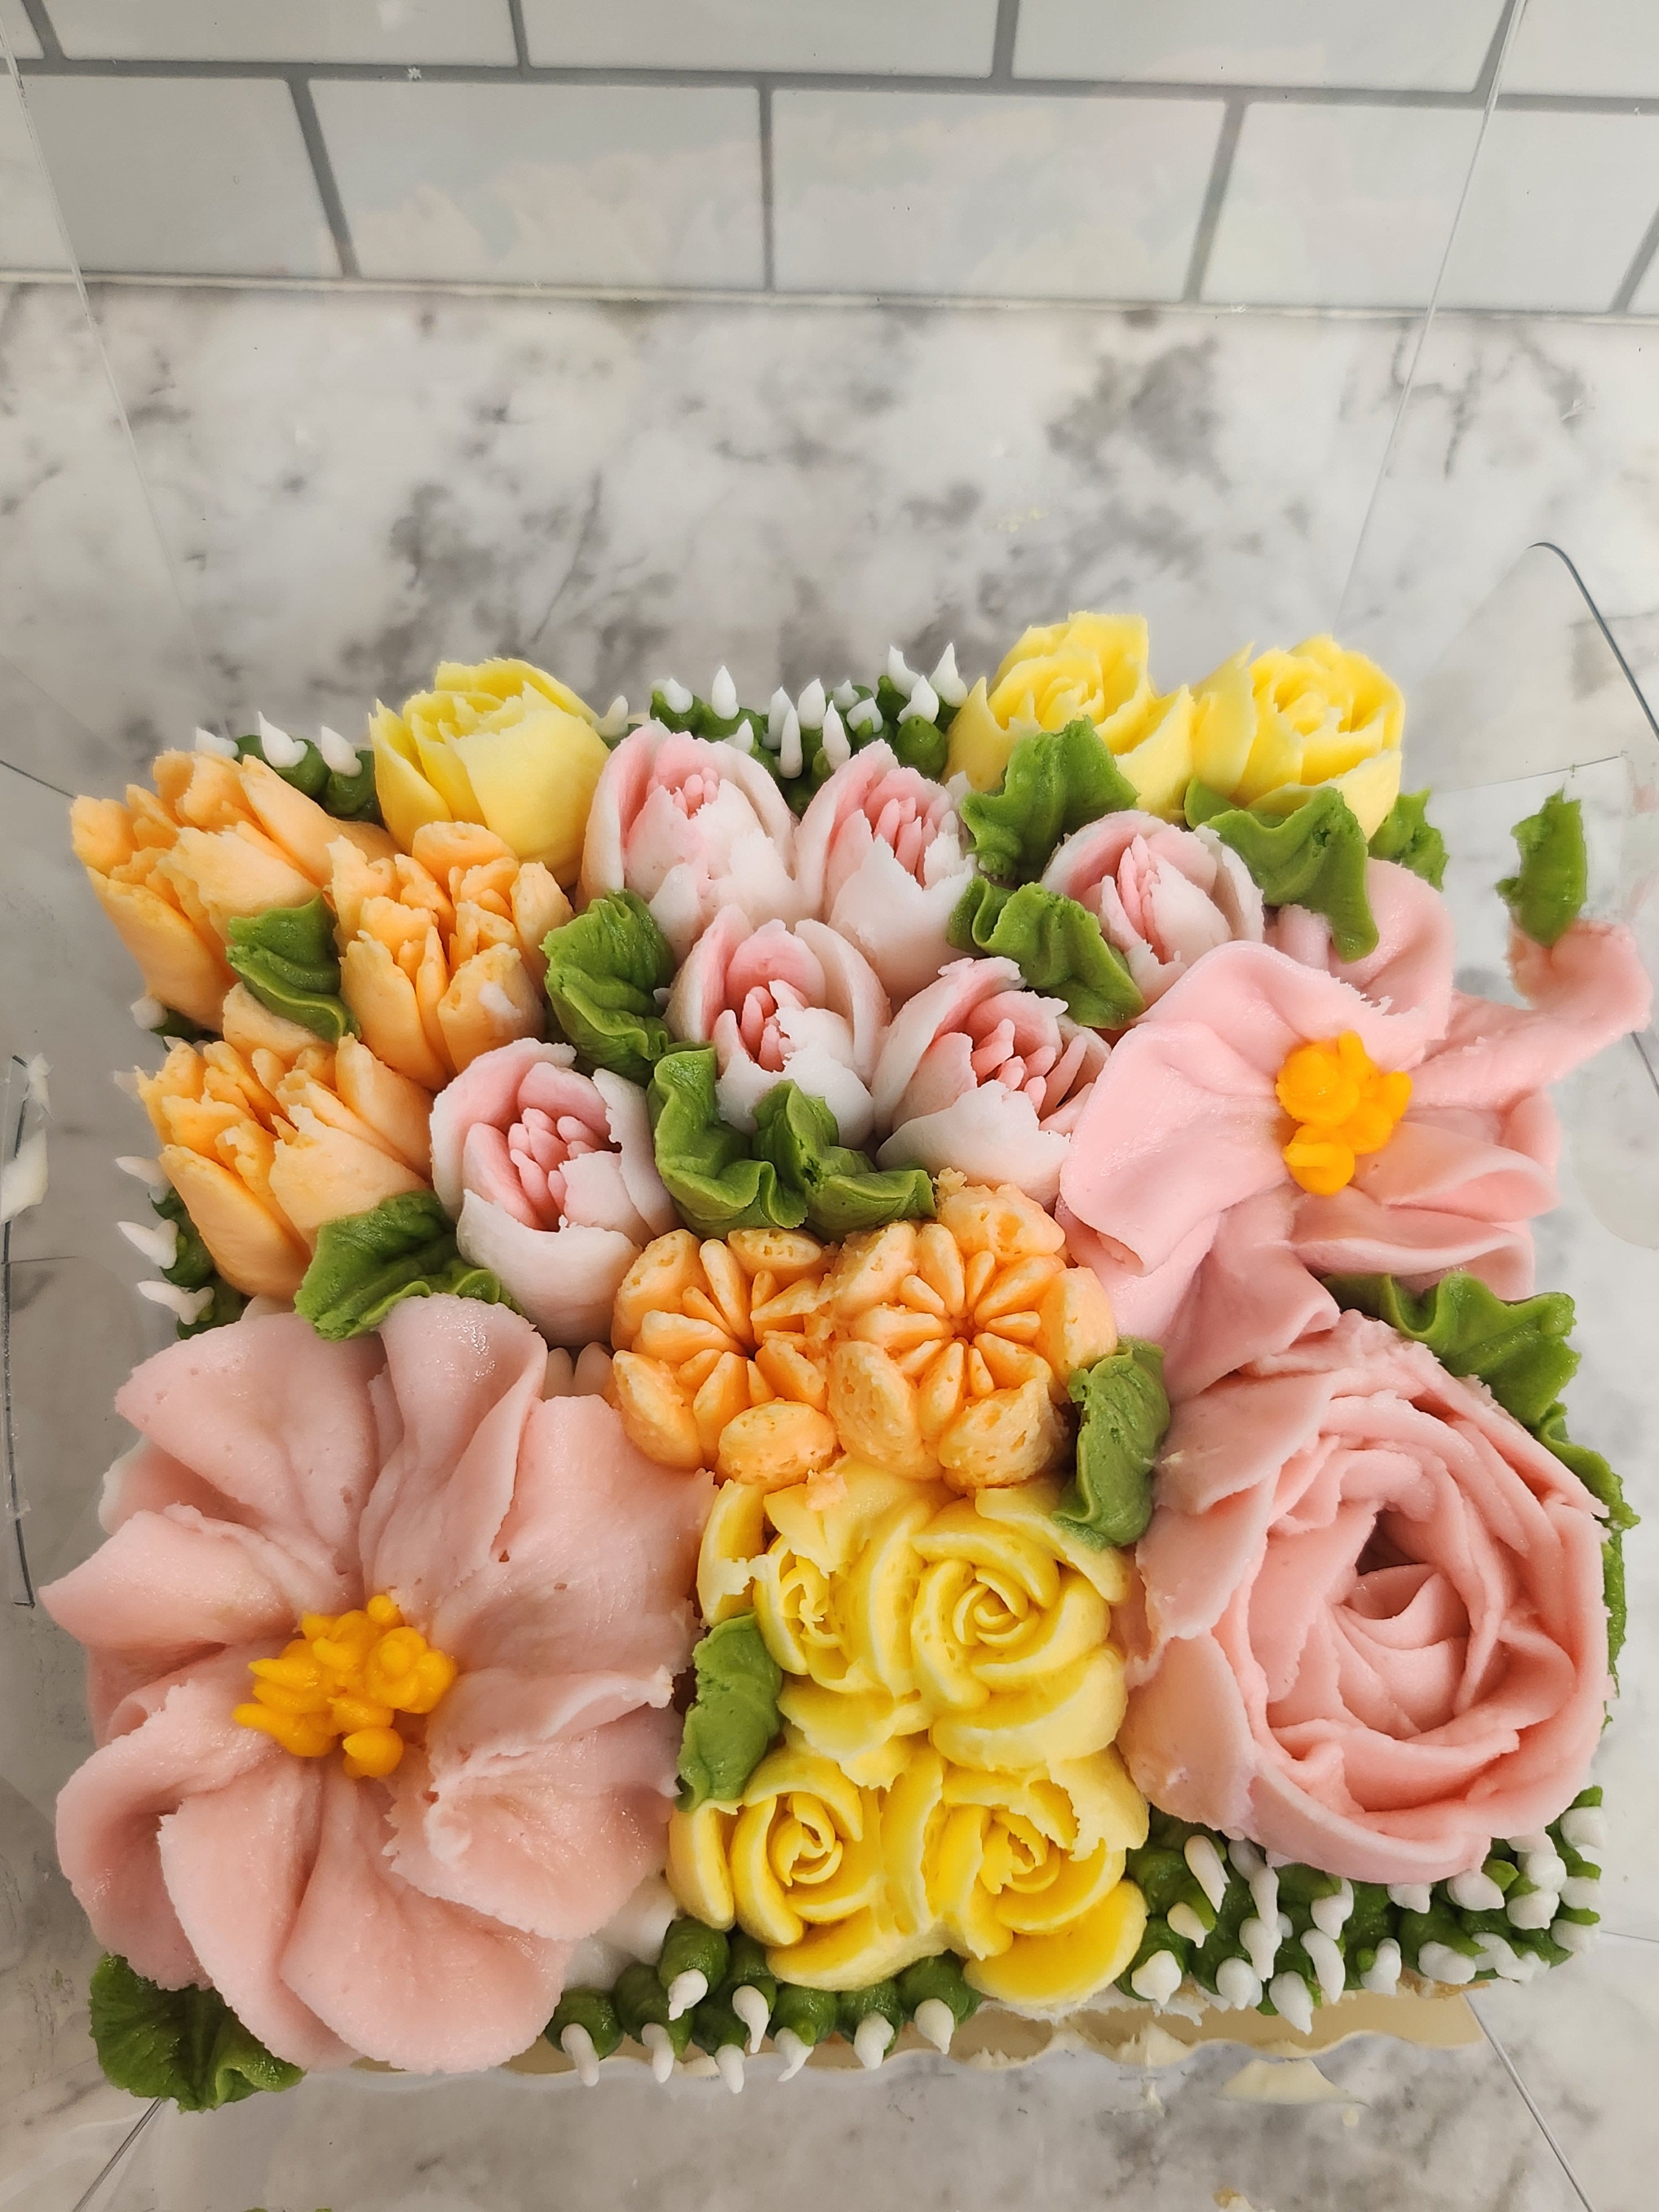 Flower box cake- Pareve